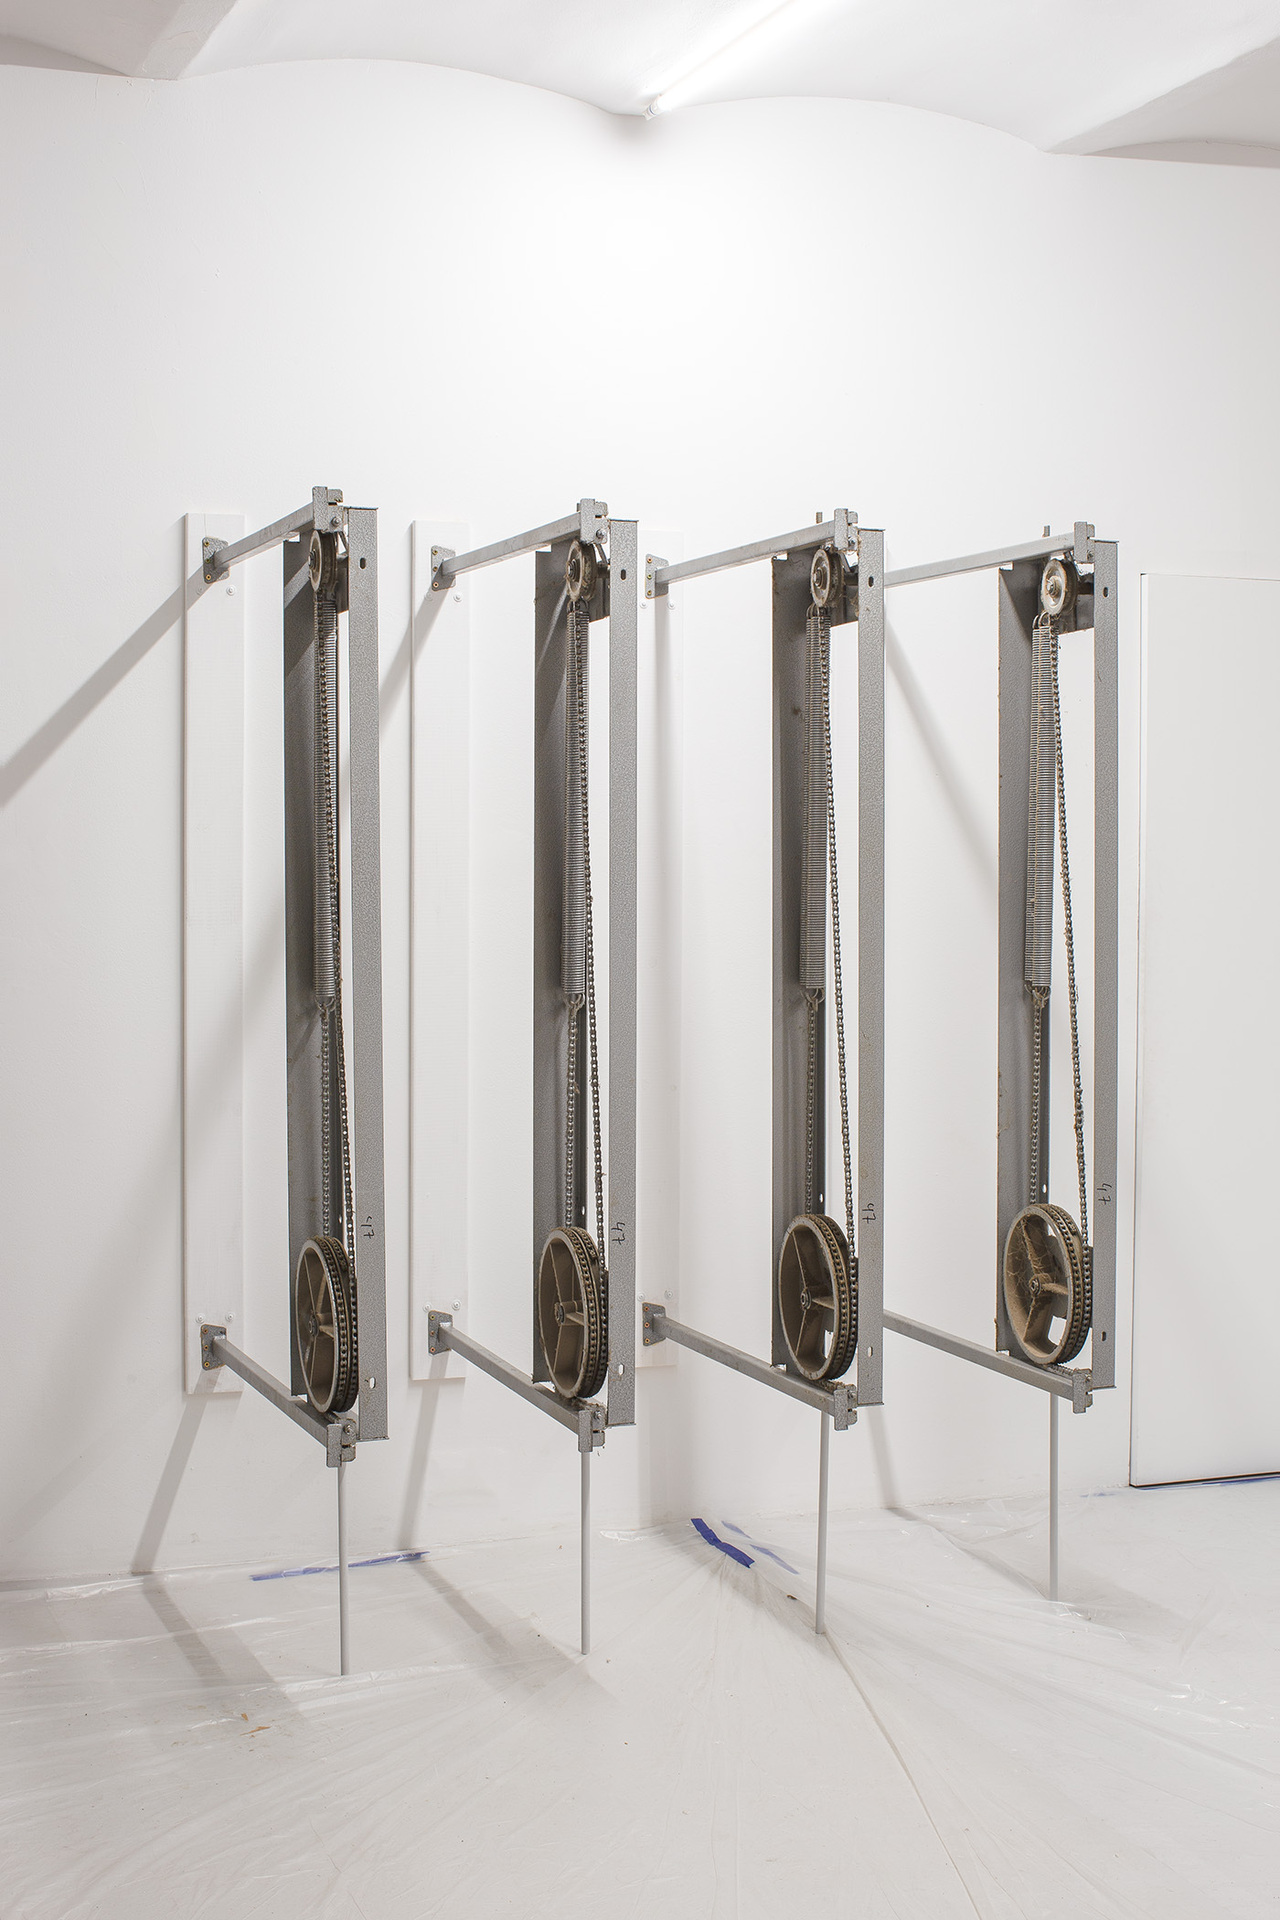 Jonad Dudd, “Group 47”, series: 4 pieces, metal construction.